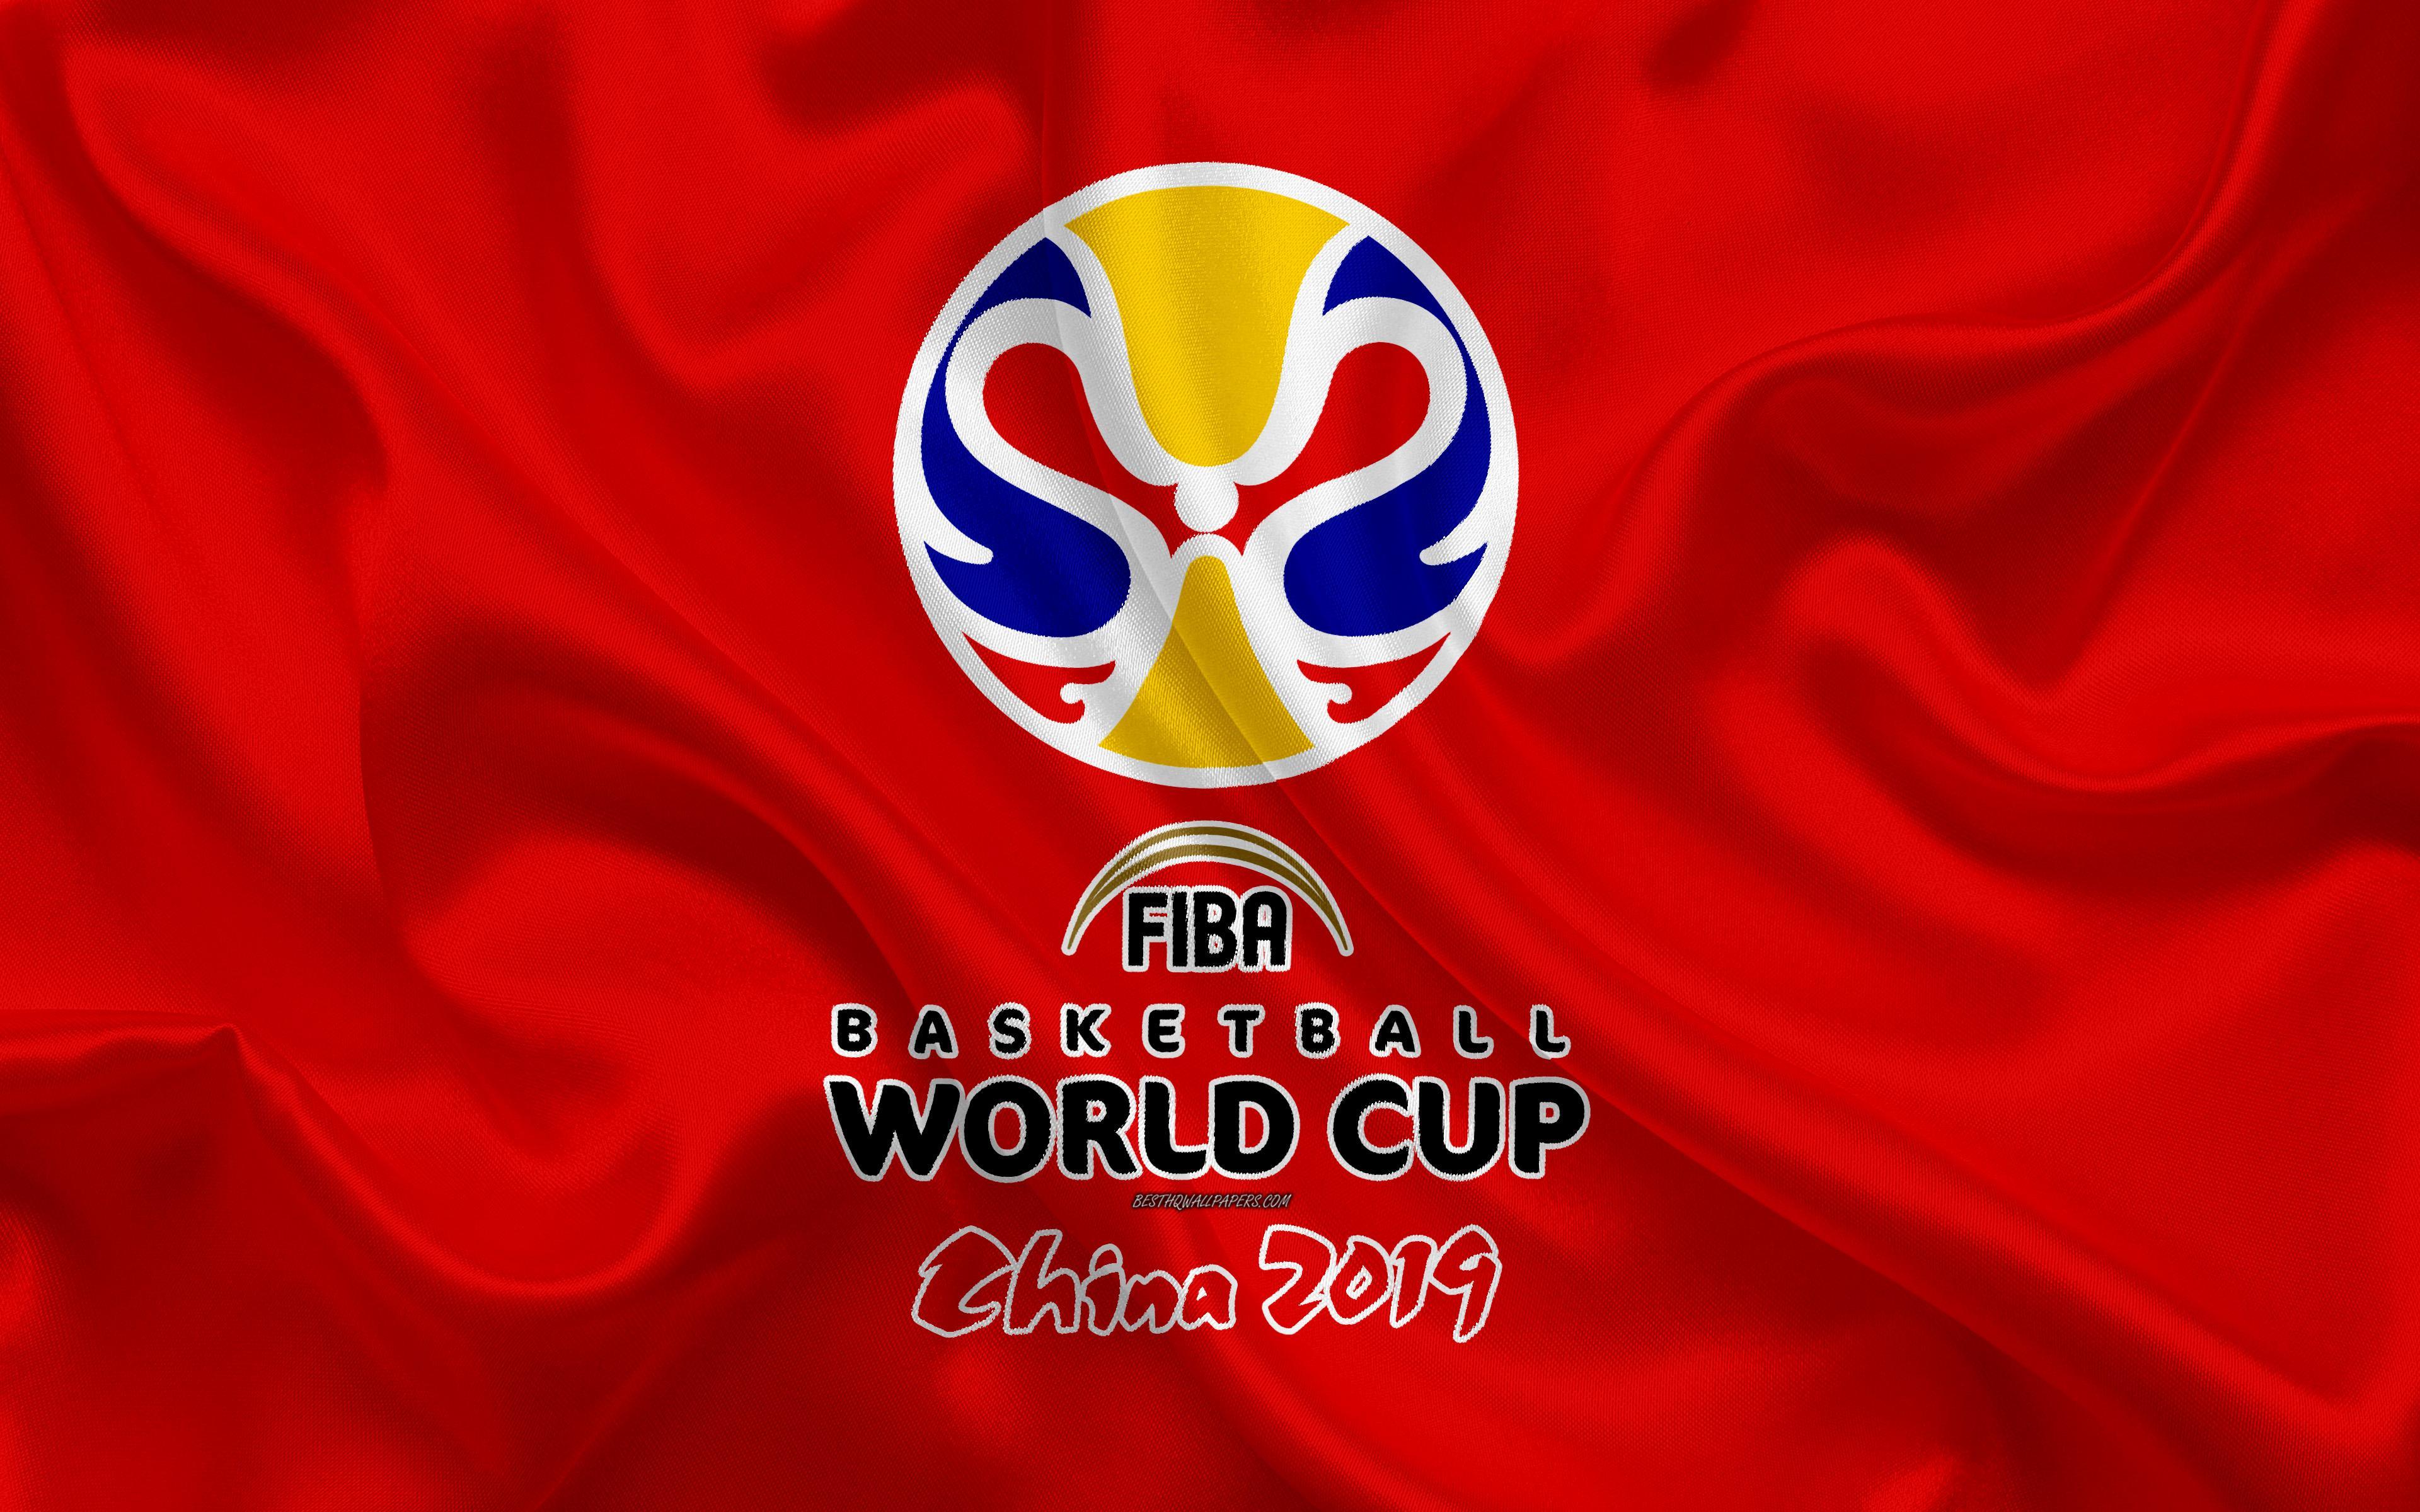 Download wallpaper FIBA Basketball World Cup logo, 4k, emblem